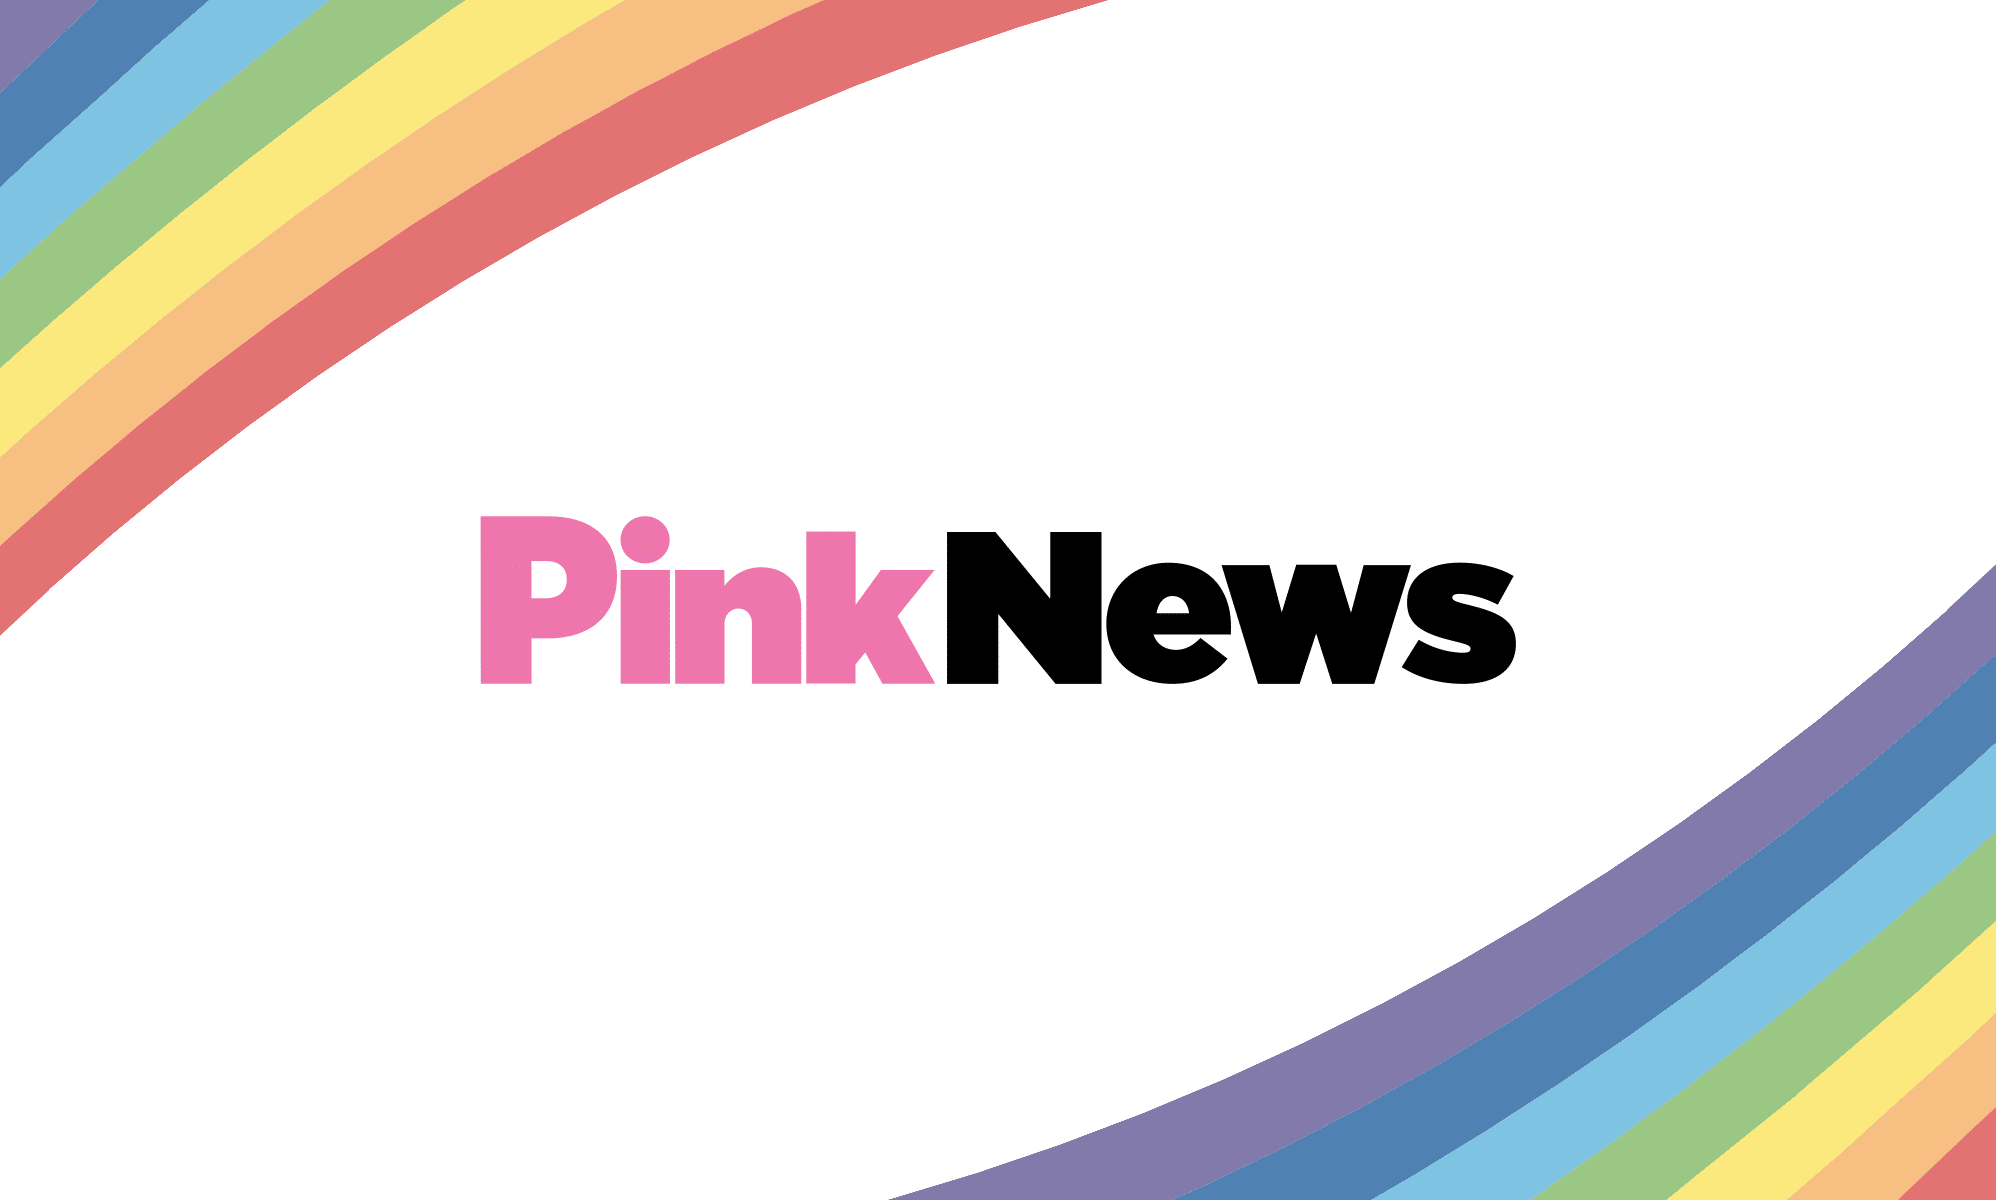 Liam Payne posts passionate defence of LGBT people after Donald Trump transgender ban